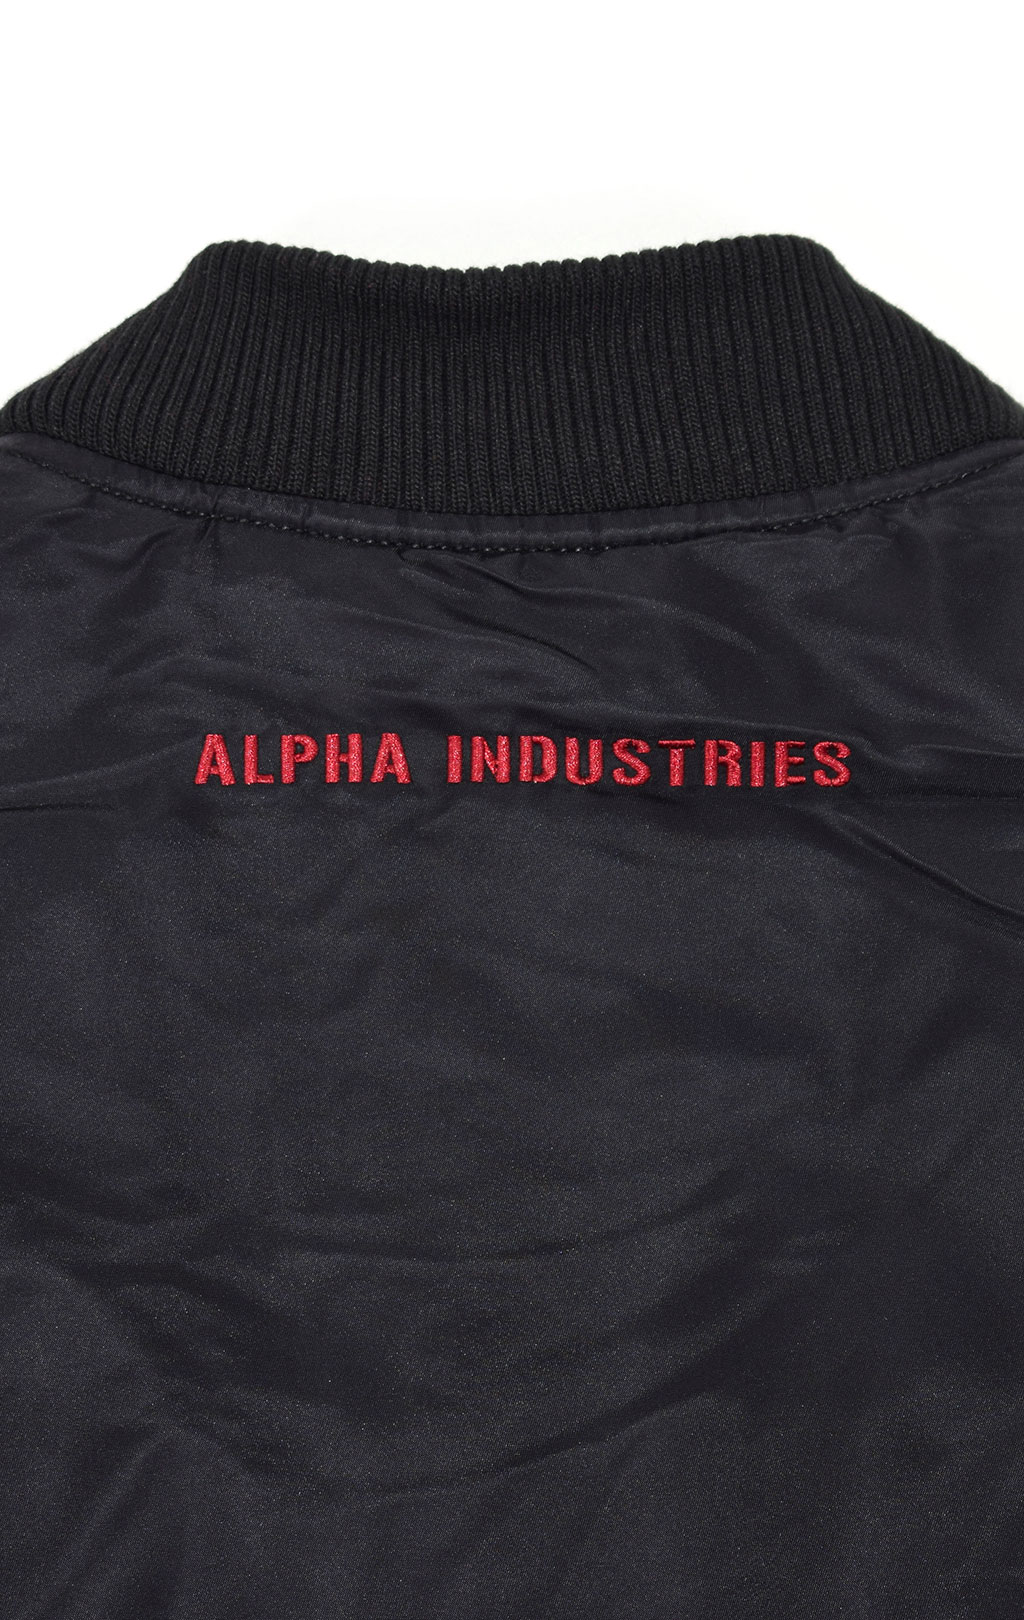 Куртка-бомбер лётная ALPHA INDUSTRIES D-Tec SE MA-1 black/red 